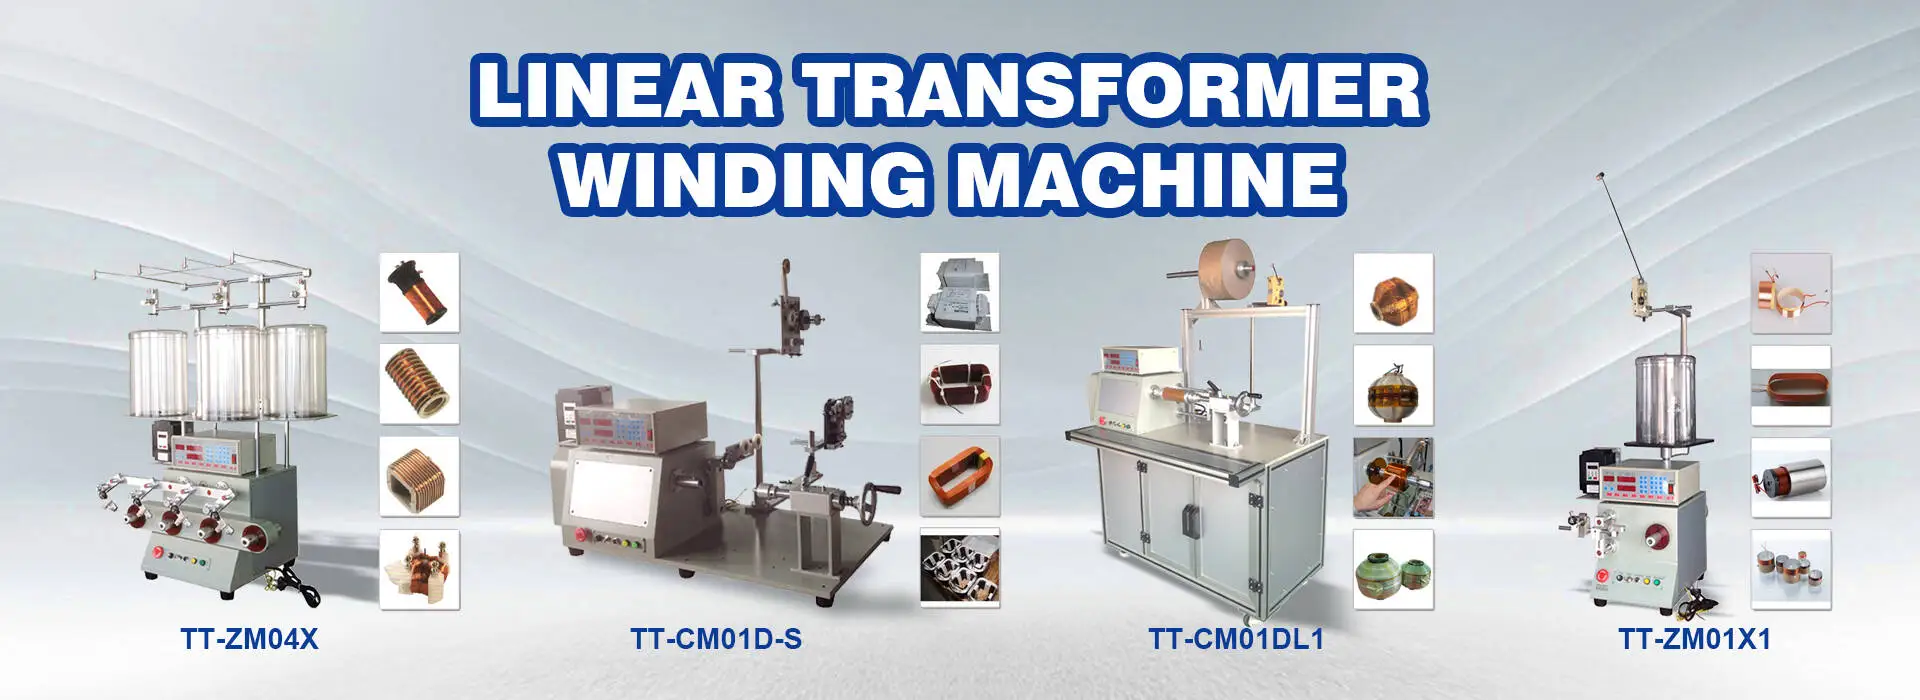 Linear transformer winding machine